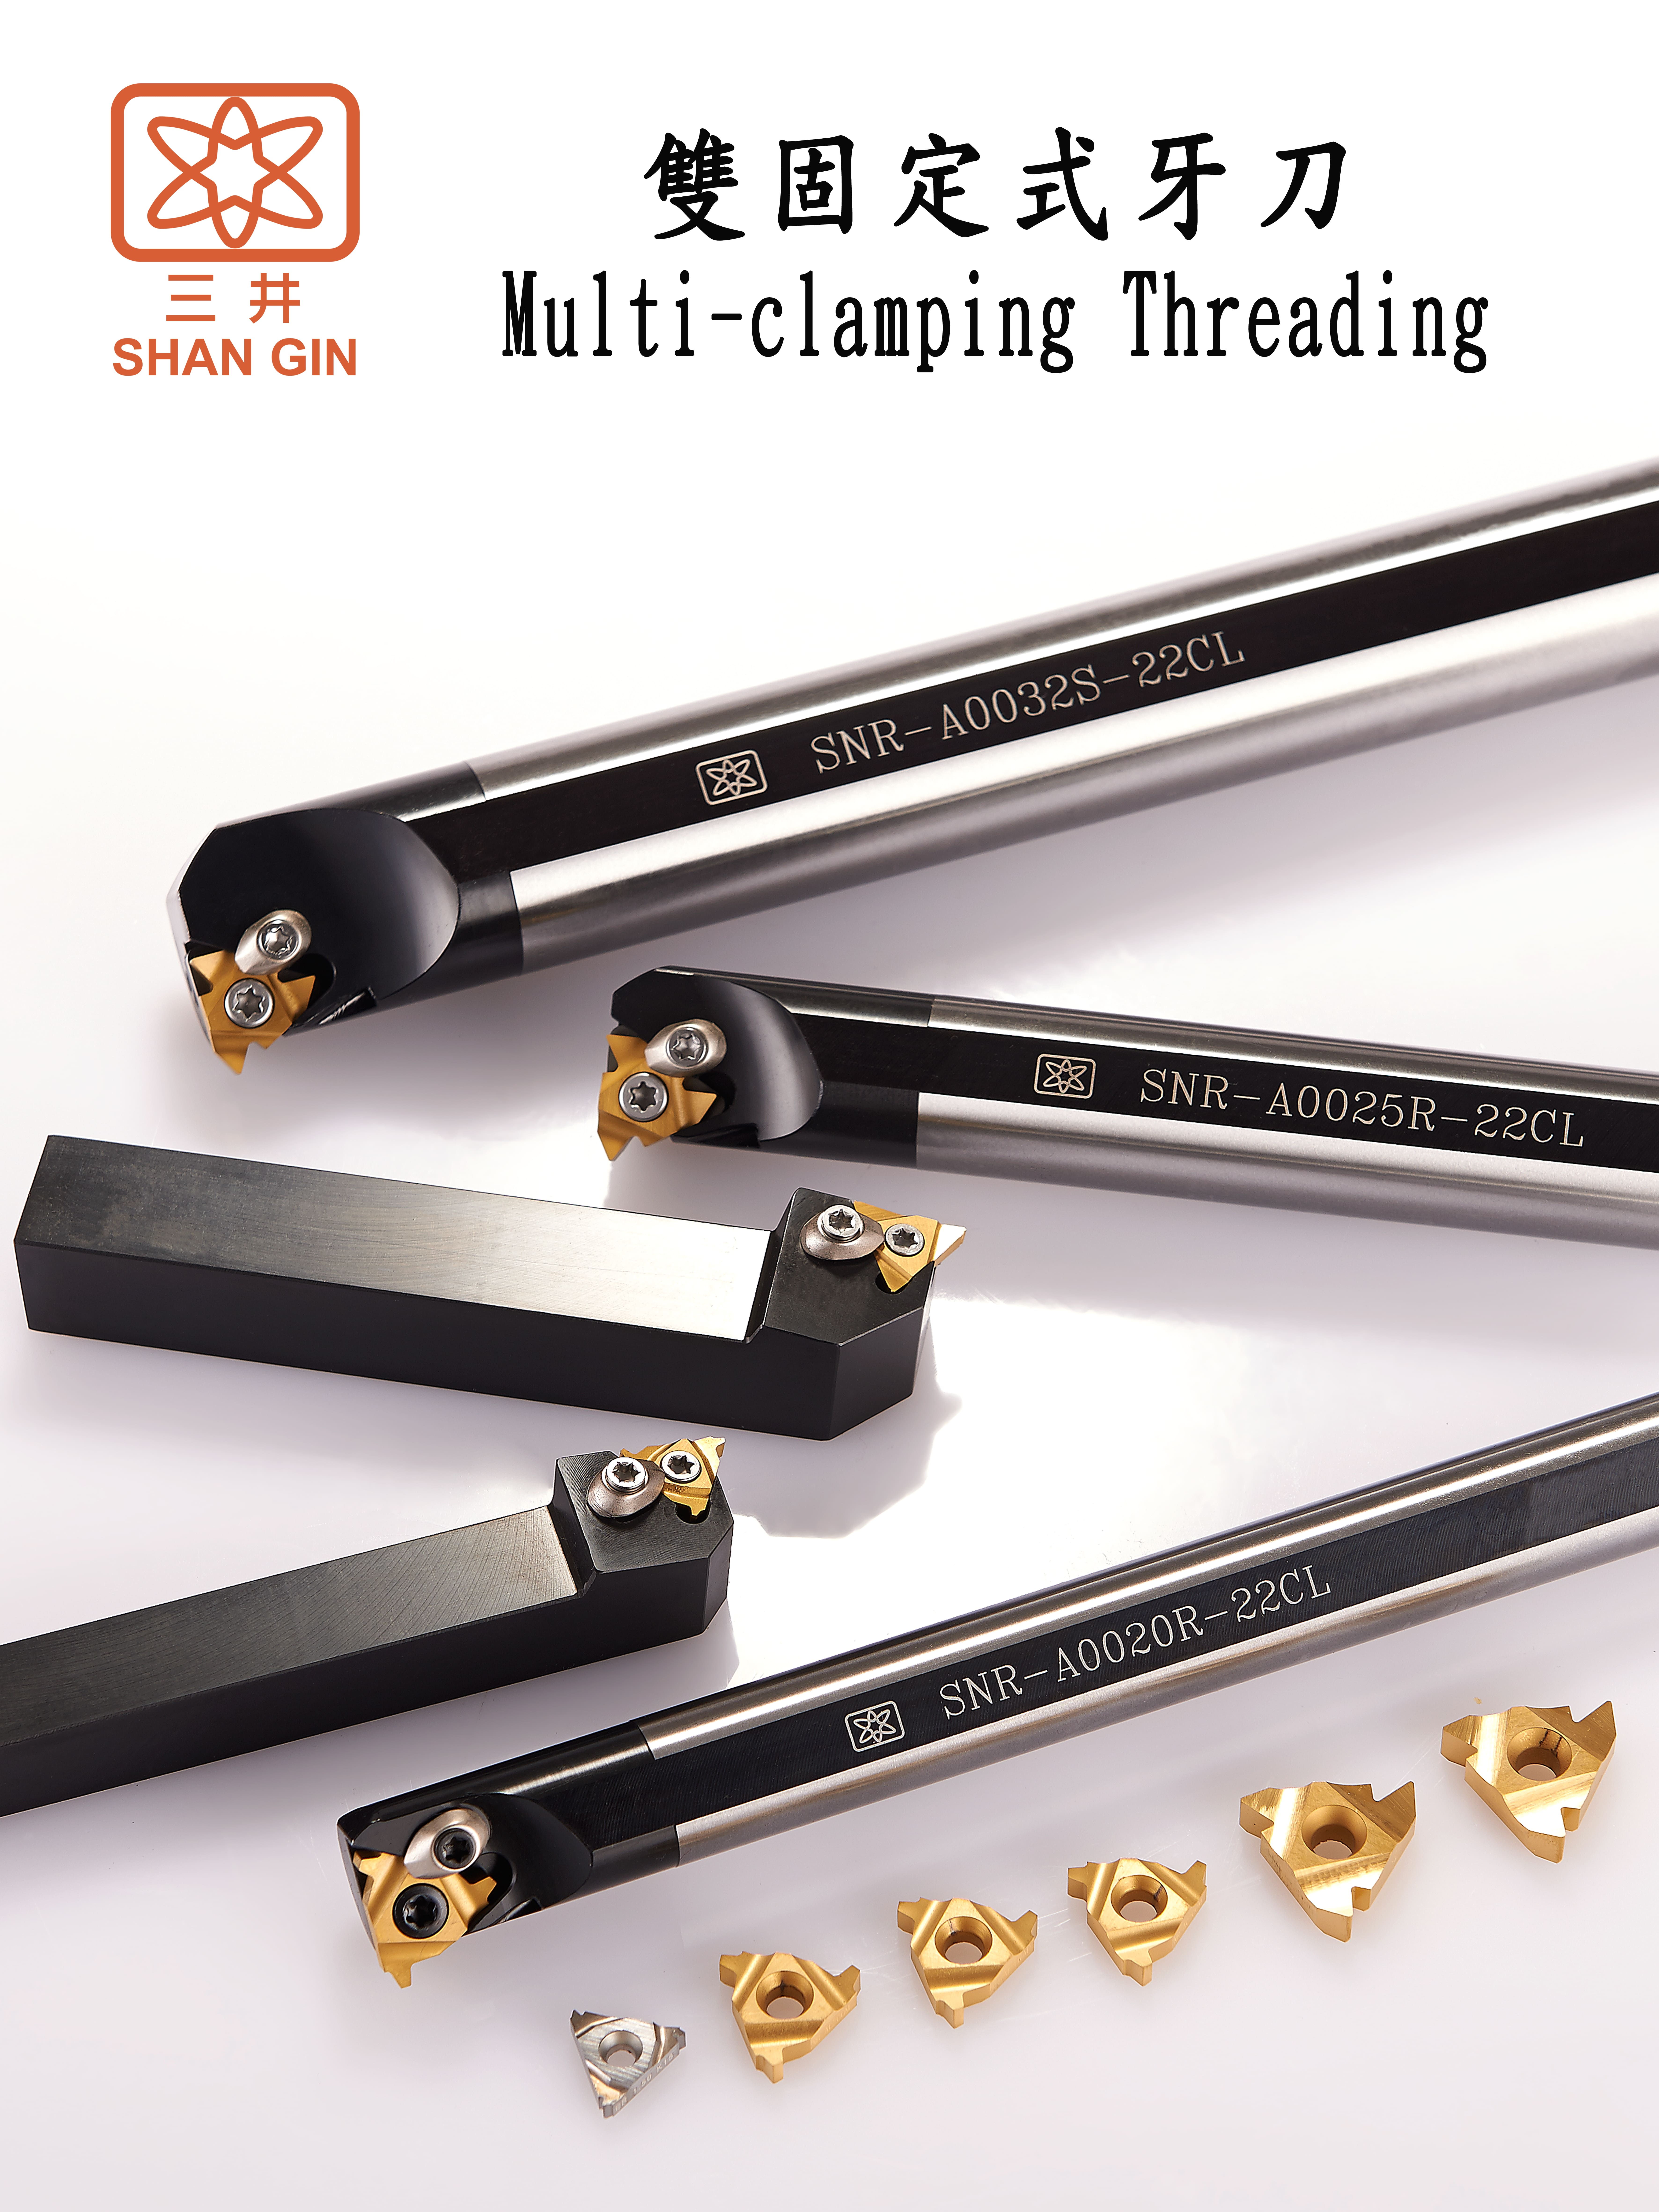 Multi-clamping Threading